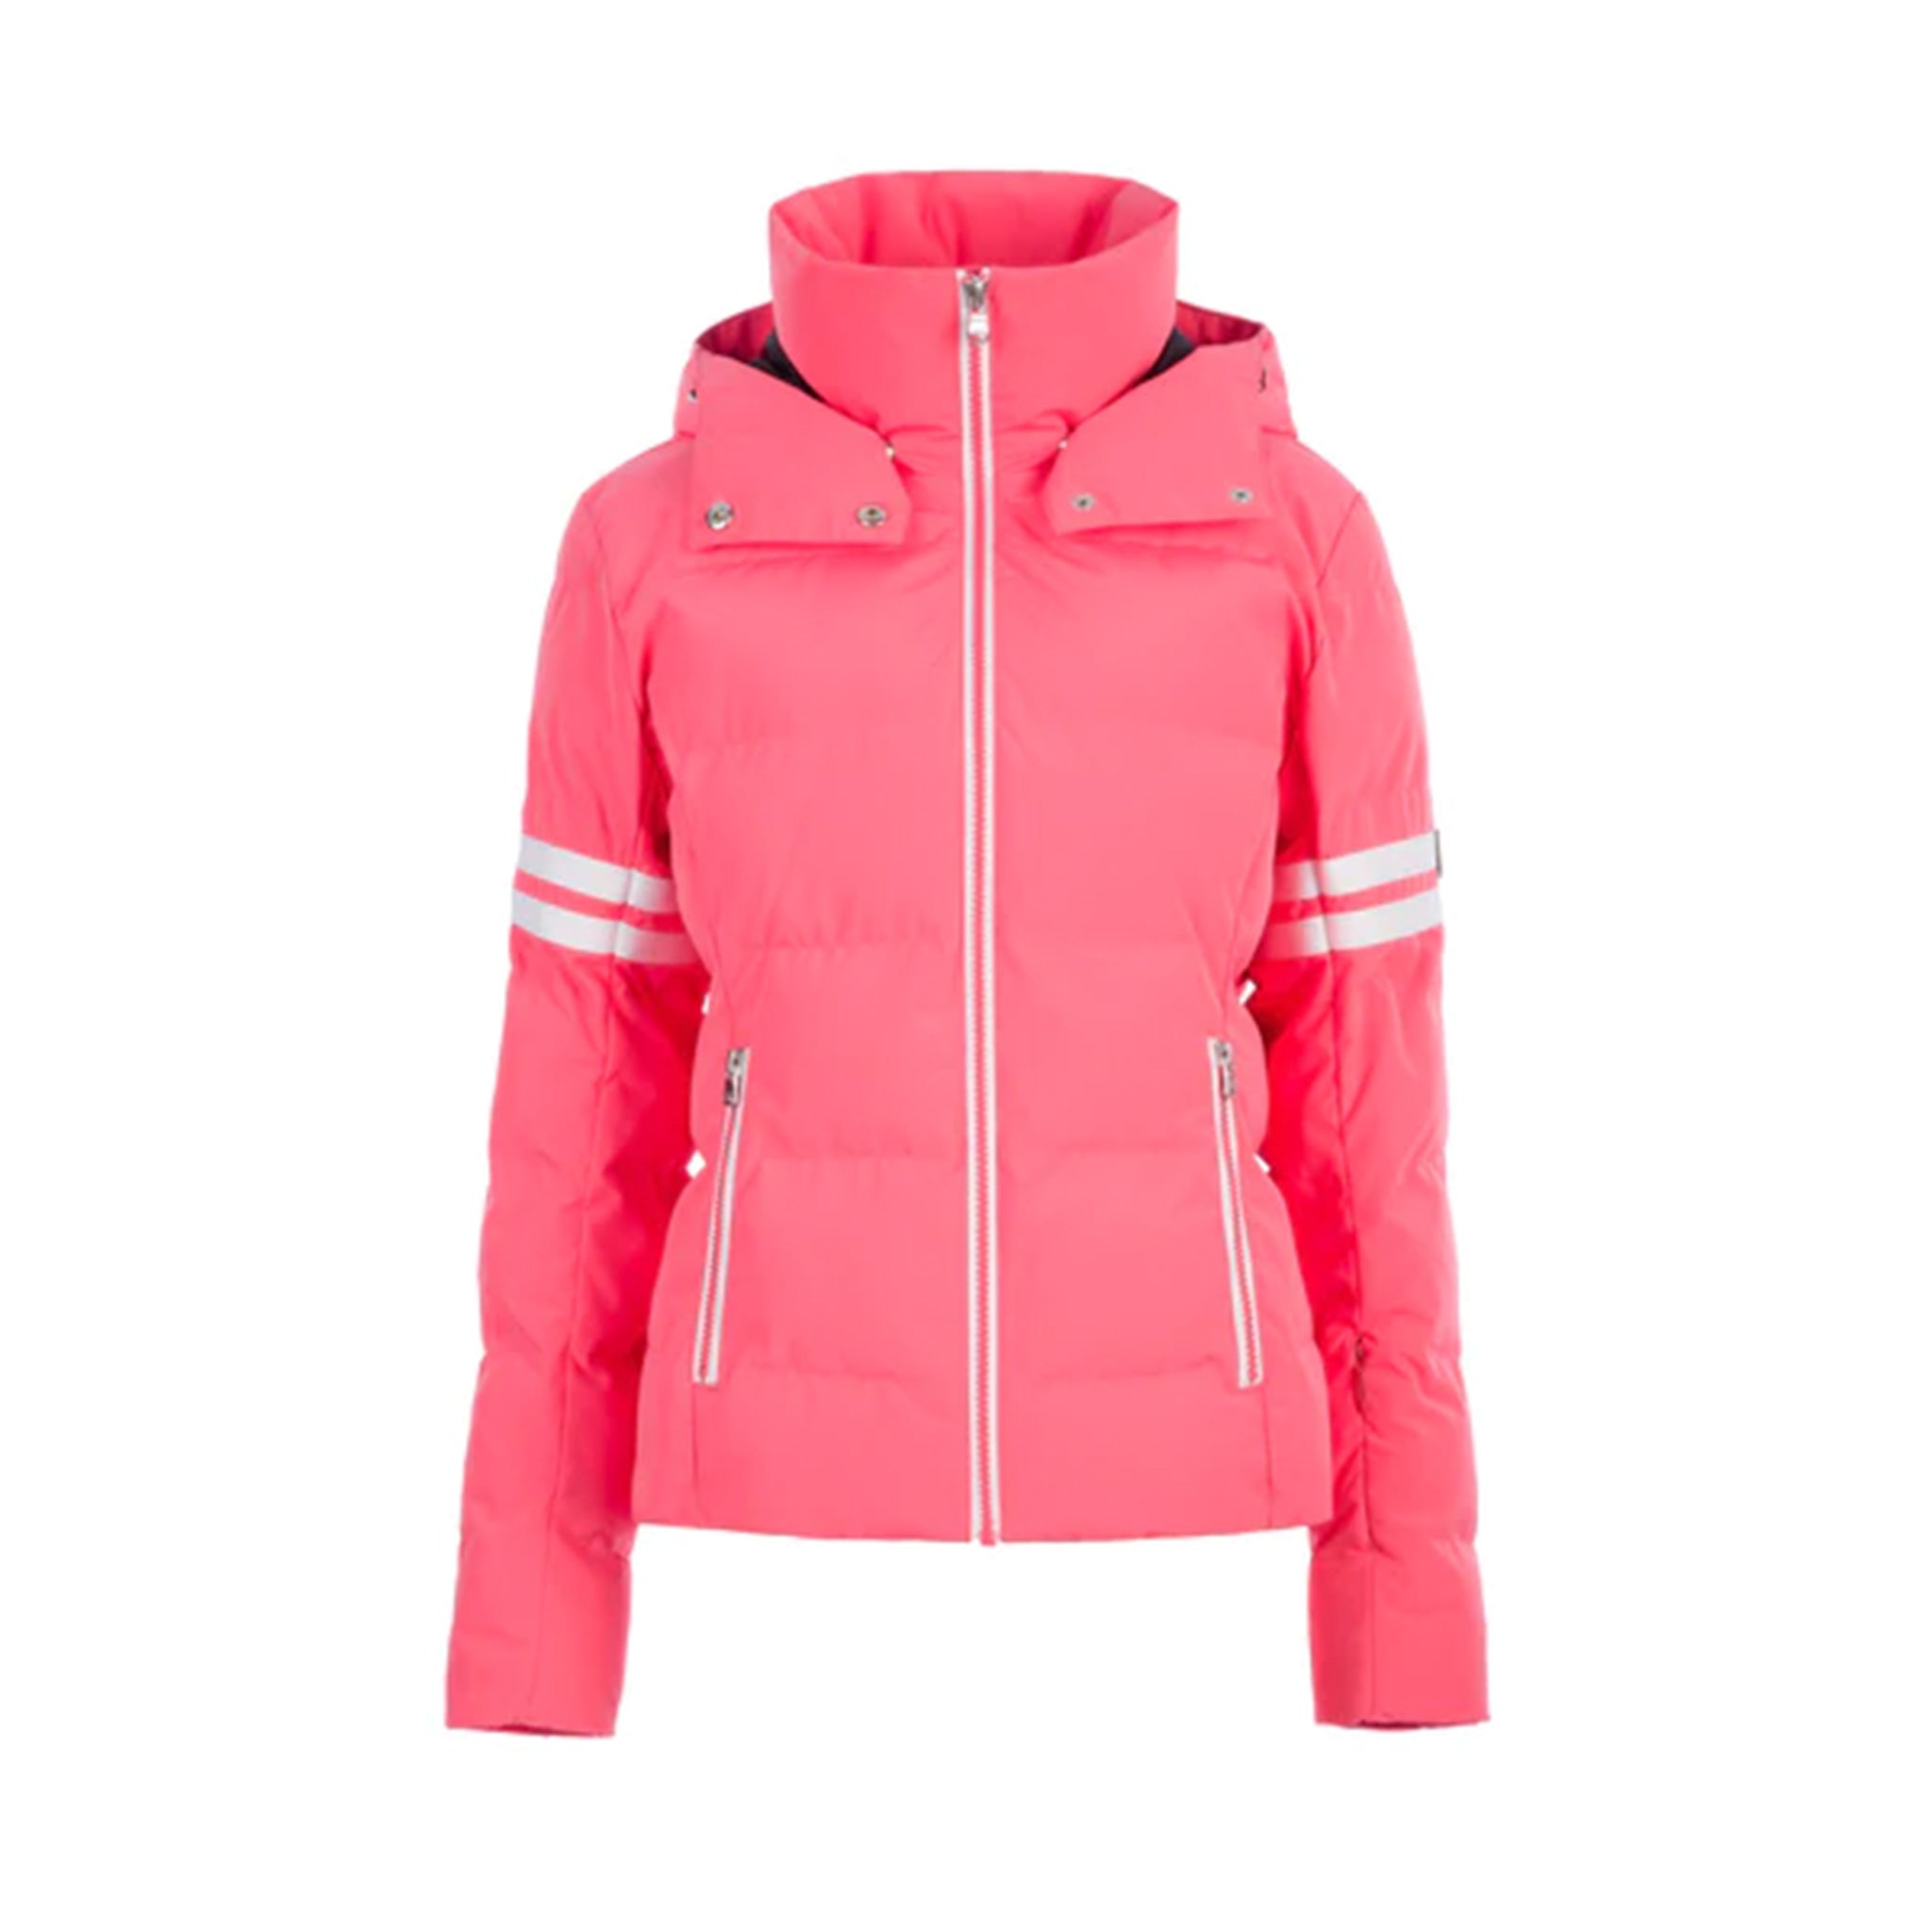 Kate Ski Jacket in Pink